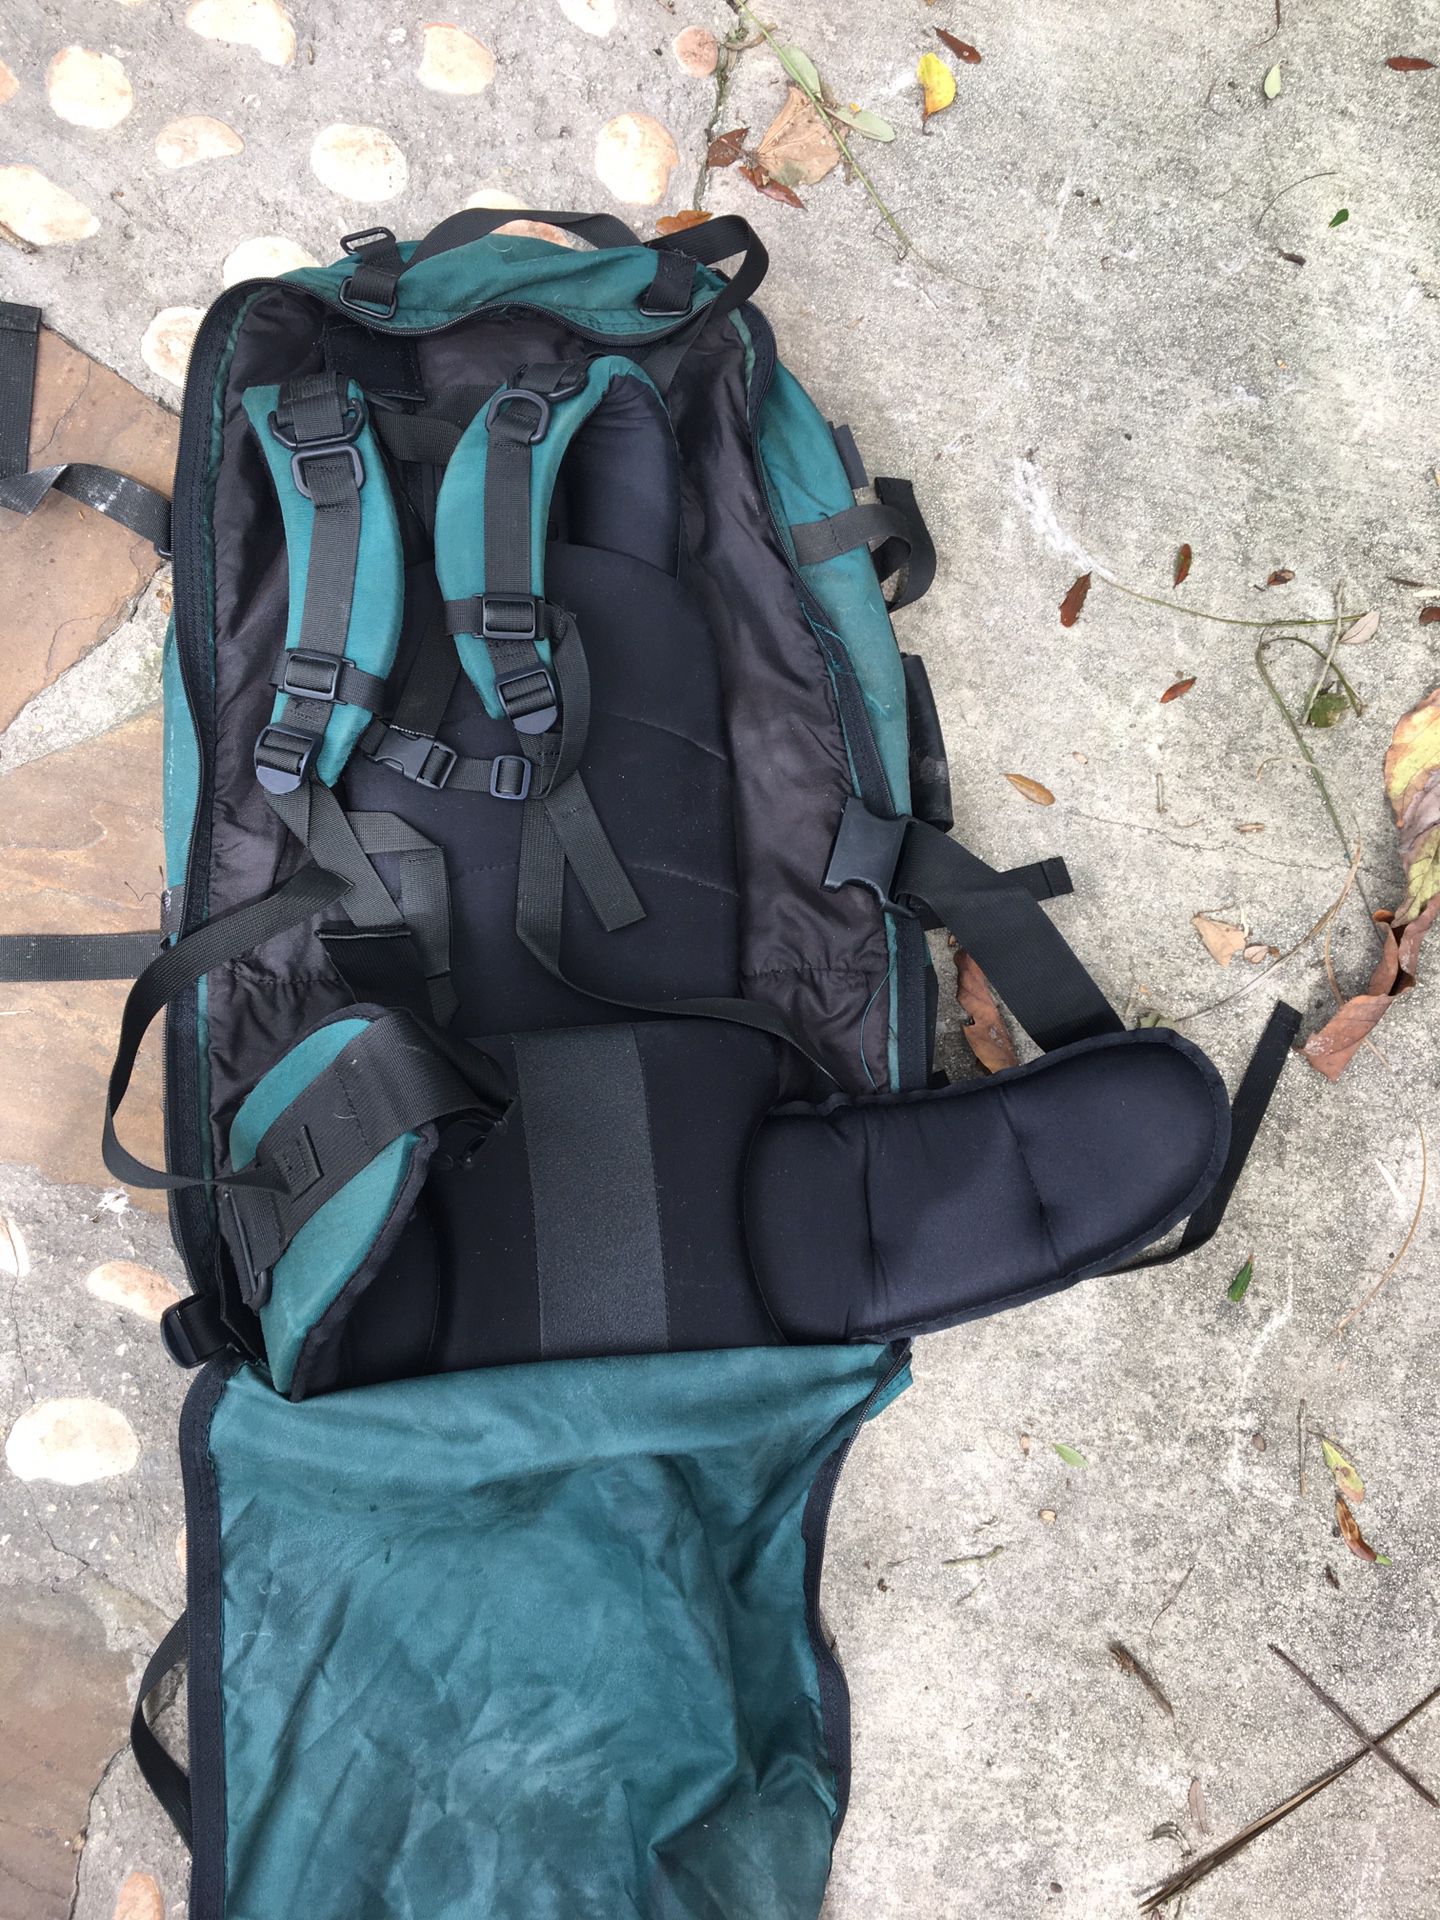 Rucksack backpack travel gear